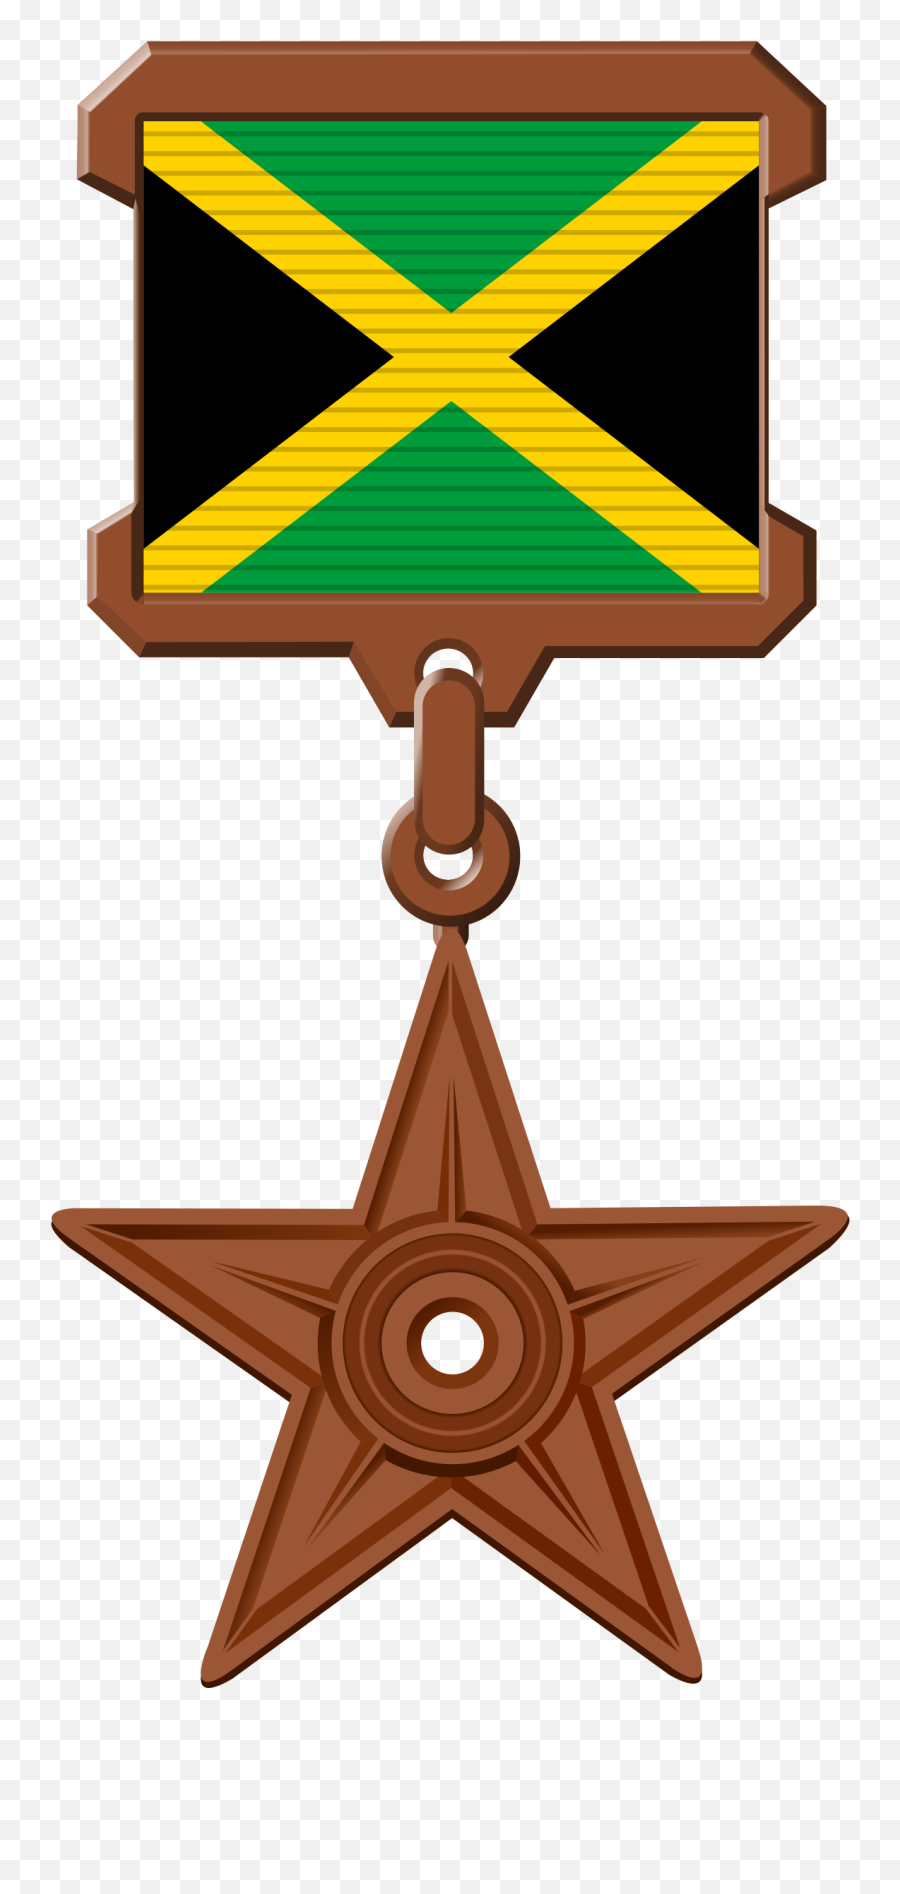 Filebonm Hires - Jamaicasvg Wikimedia Commons Emoji,Jamaica Clipart